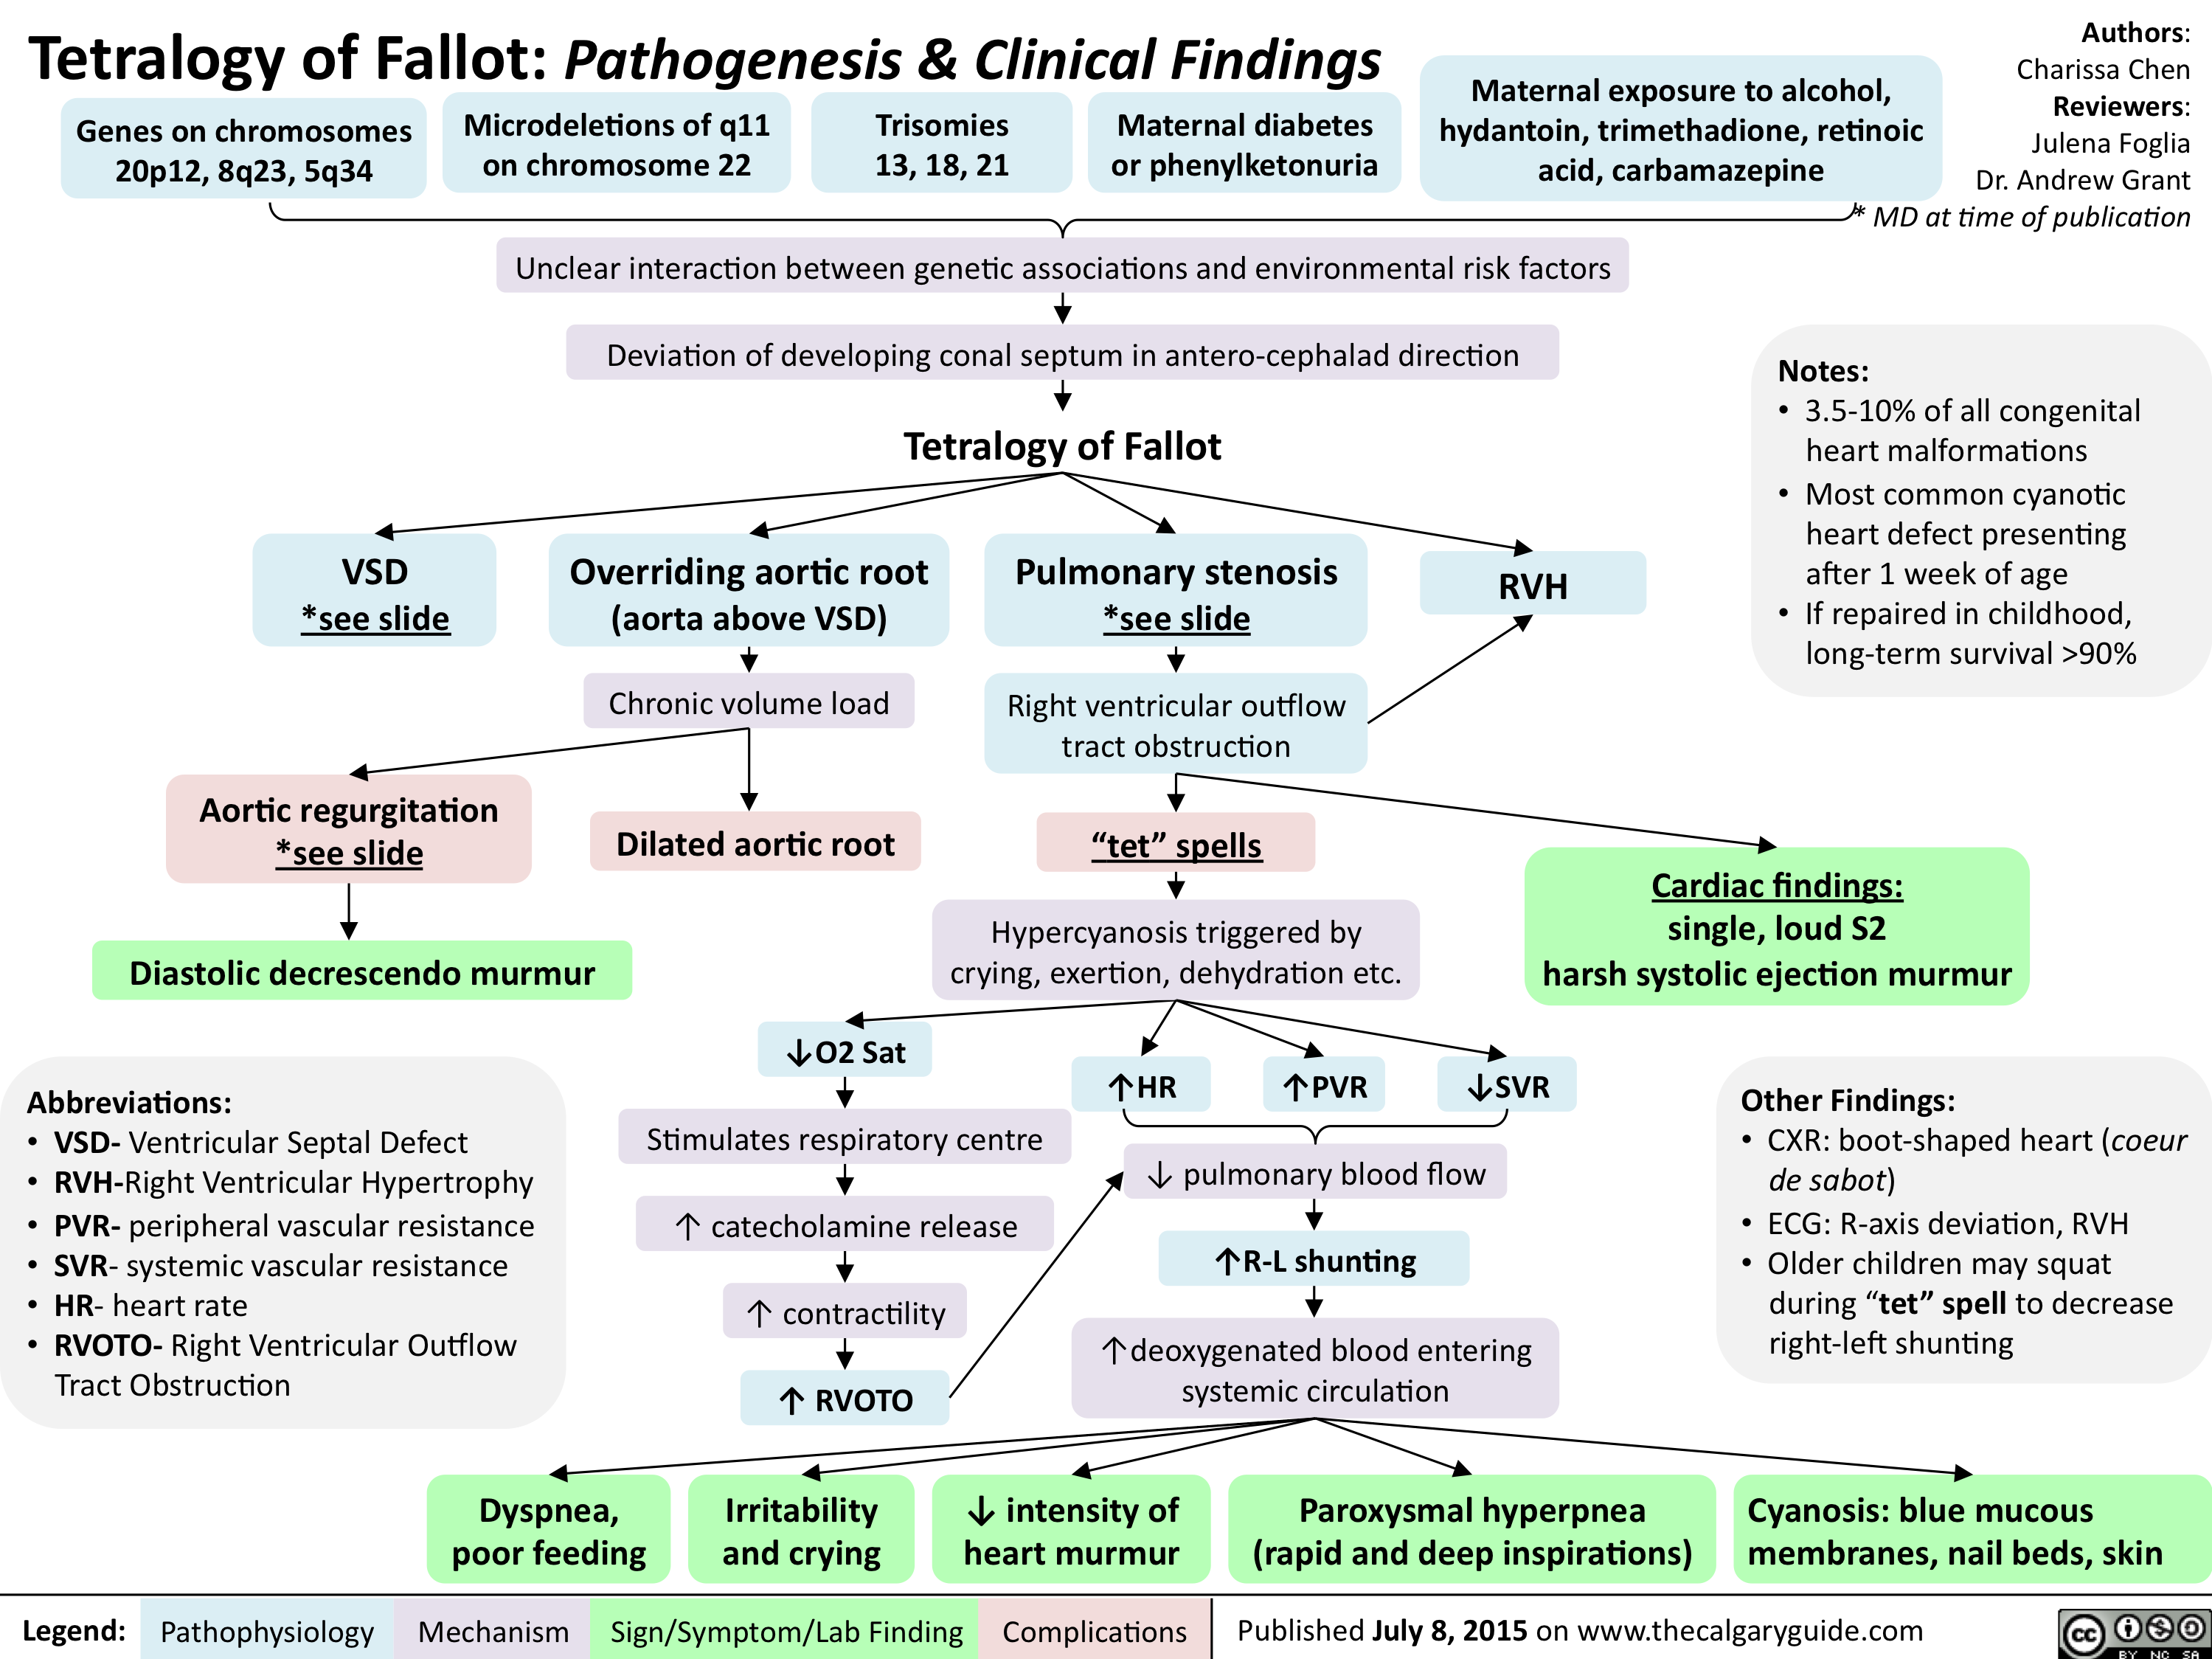 Tetralogy of Fallot-Pathogenesis & Clinical Findings